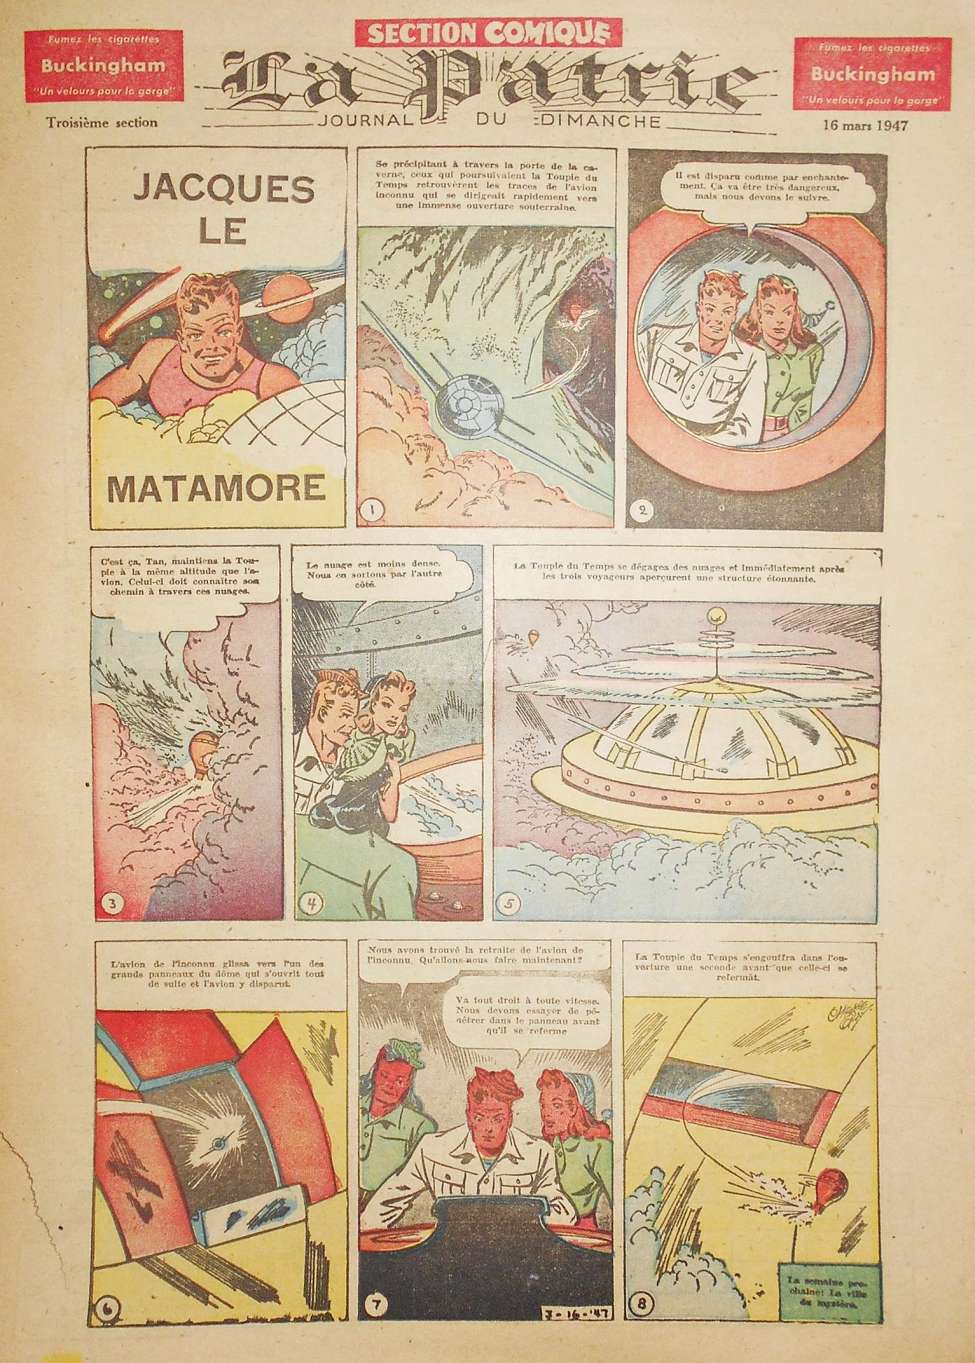 Comic Book Cover For La Patrie - Section Comique (1947-03-16)